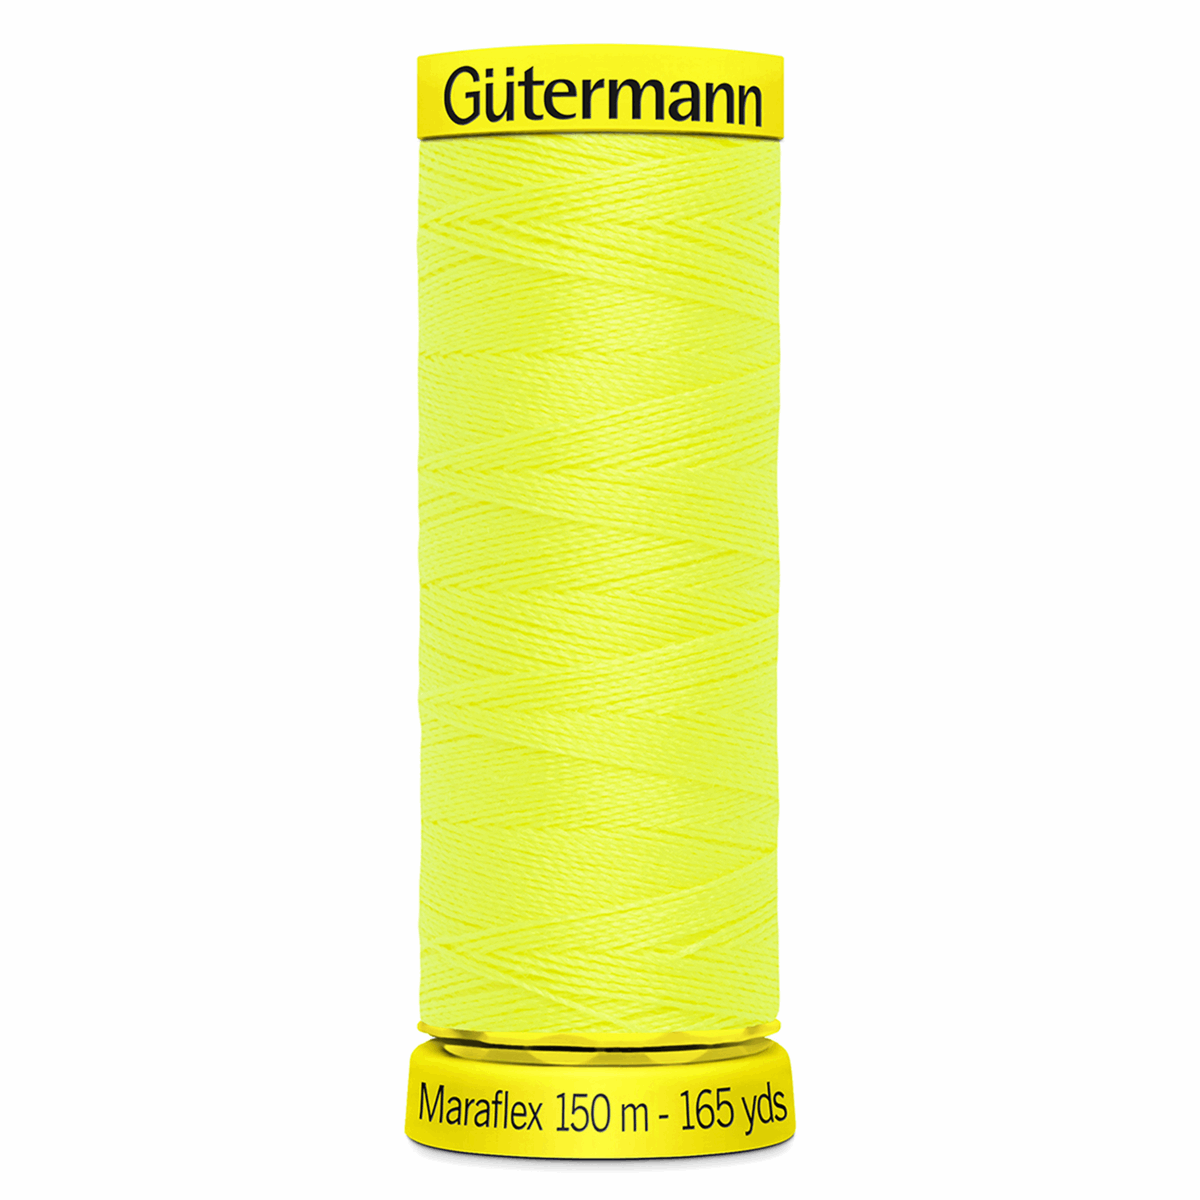 Gutermann Maraflex Elastic Sewing Thread 150m Neon Yellow 3835